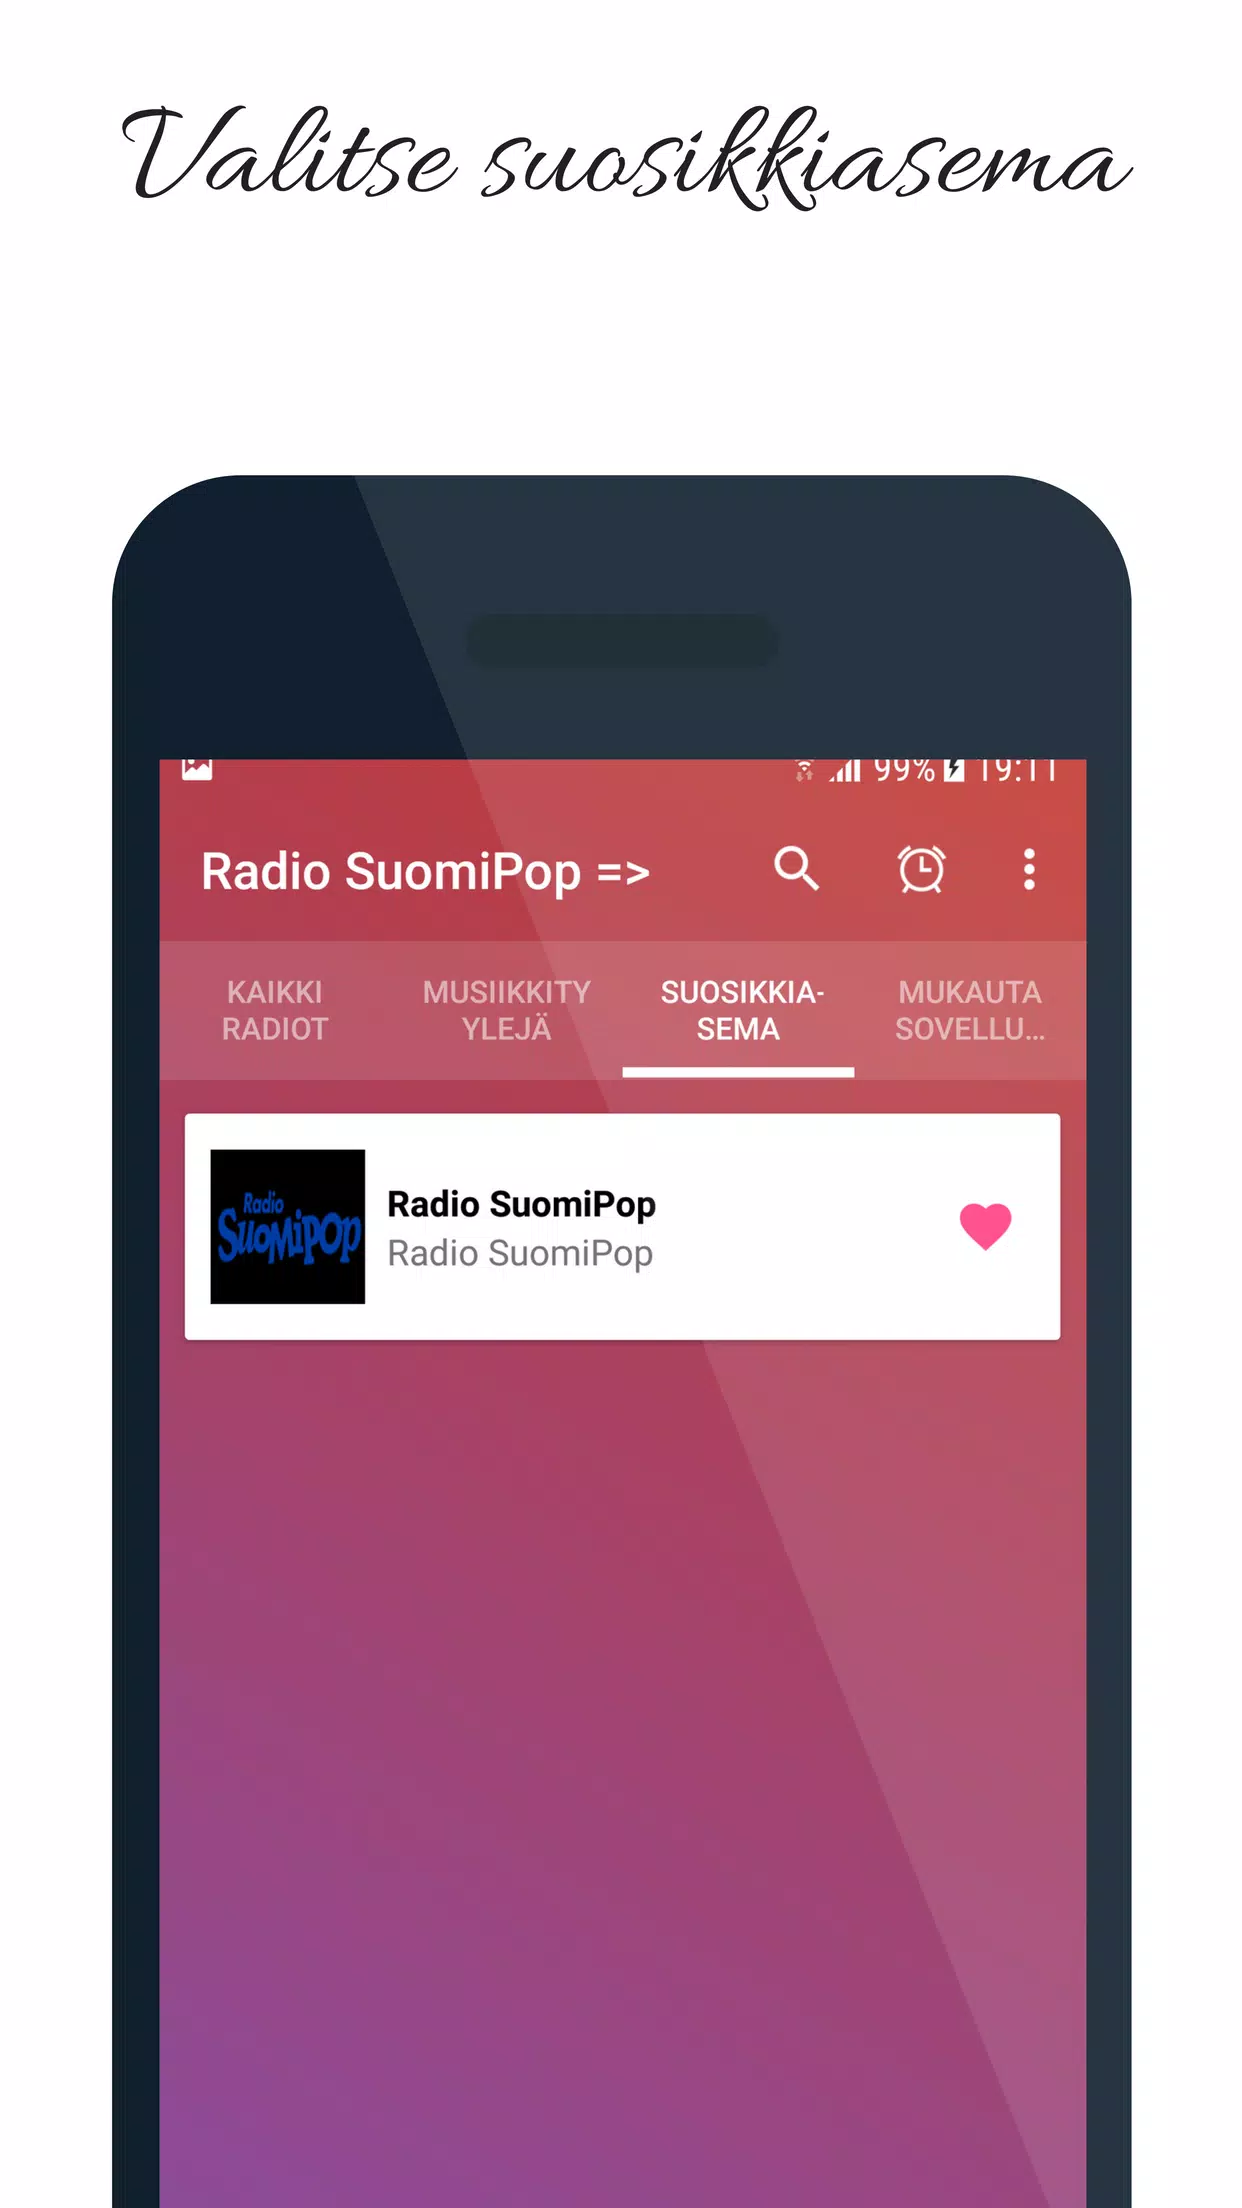 Descarga de APK de Radio SuomiPop Station FM verkossa Helsinki para Android